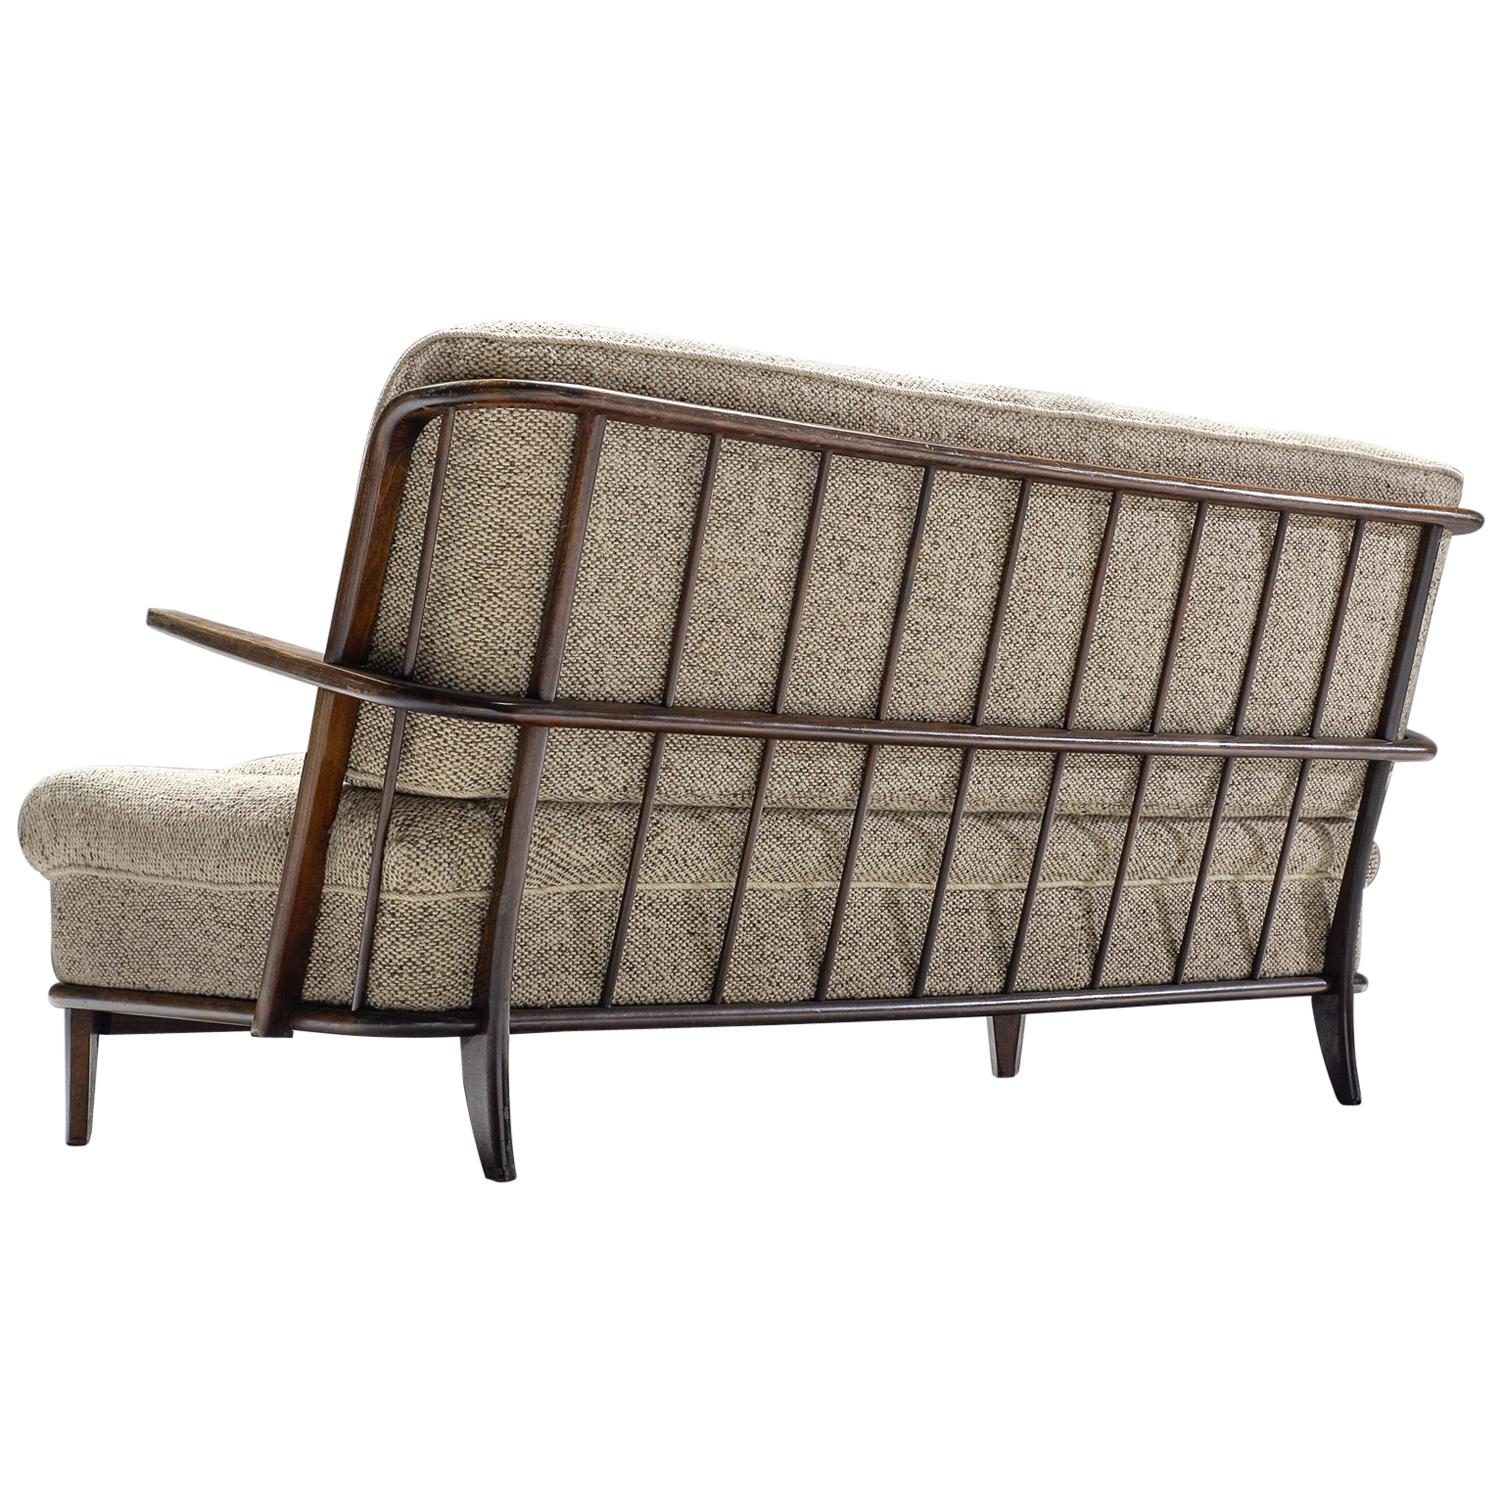 Danish Wooden Comfortable Basket Sofa